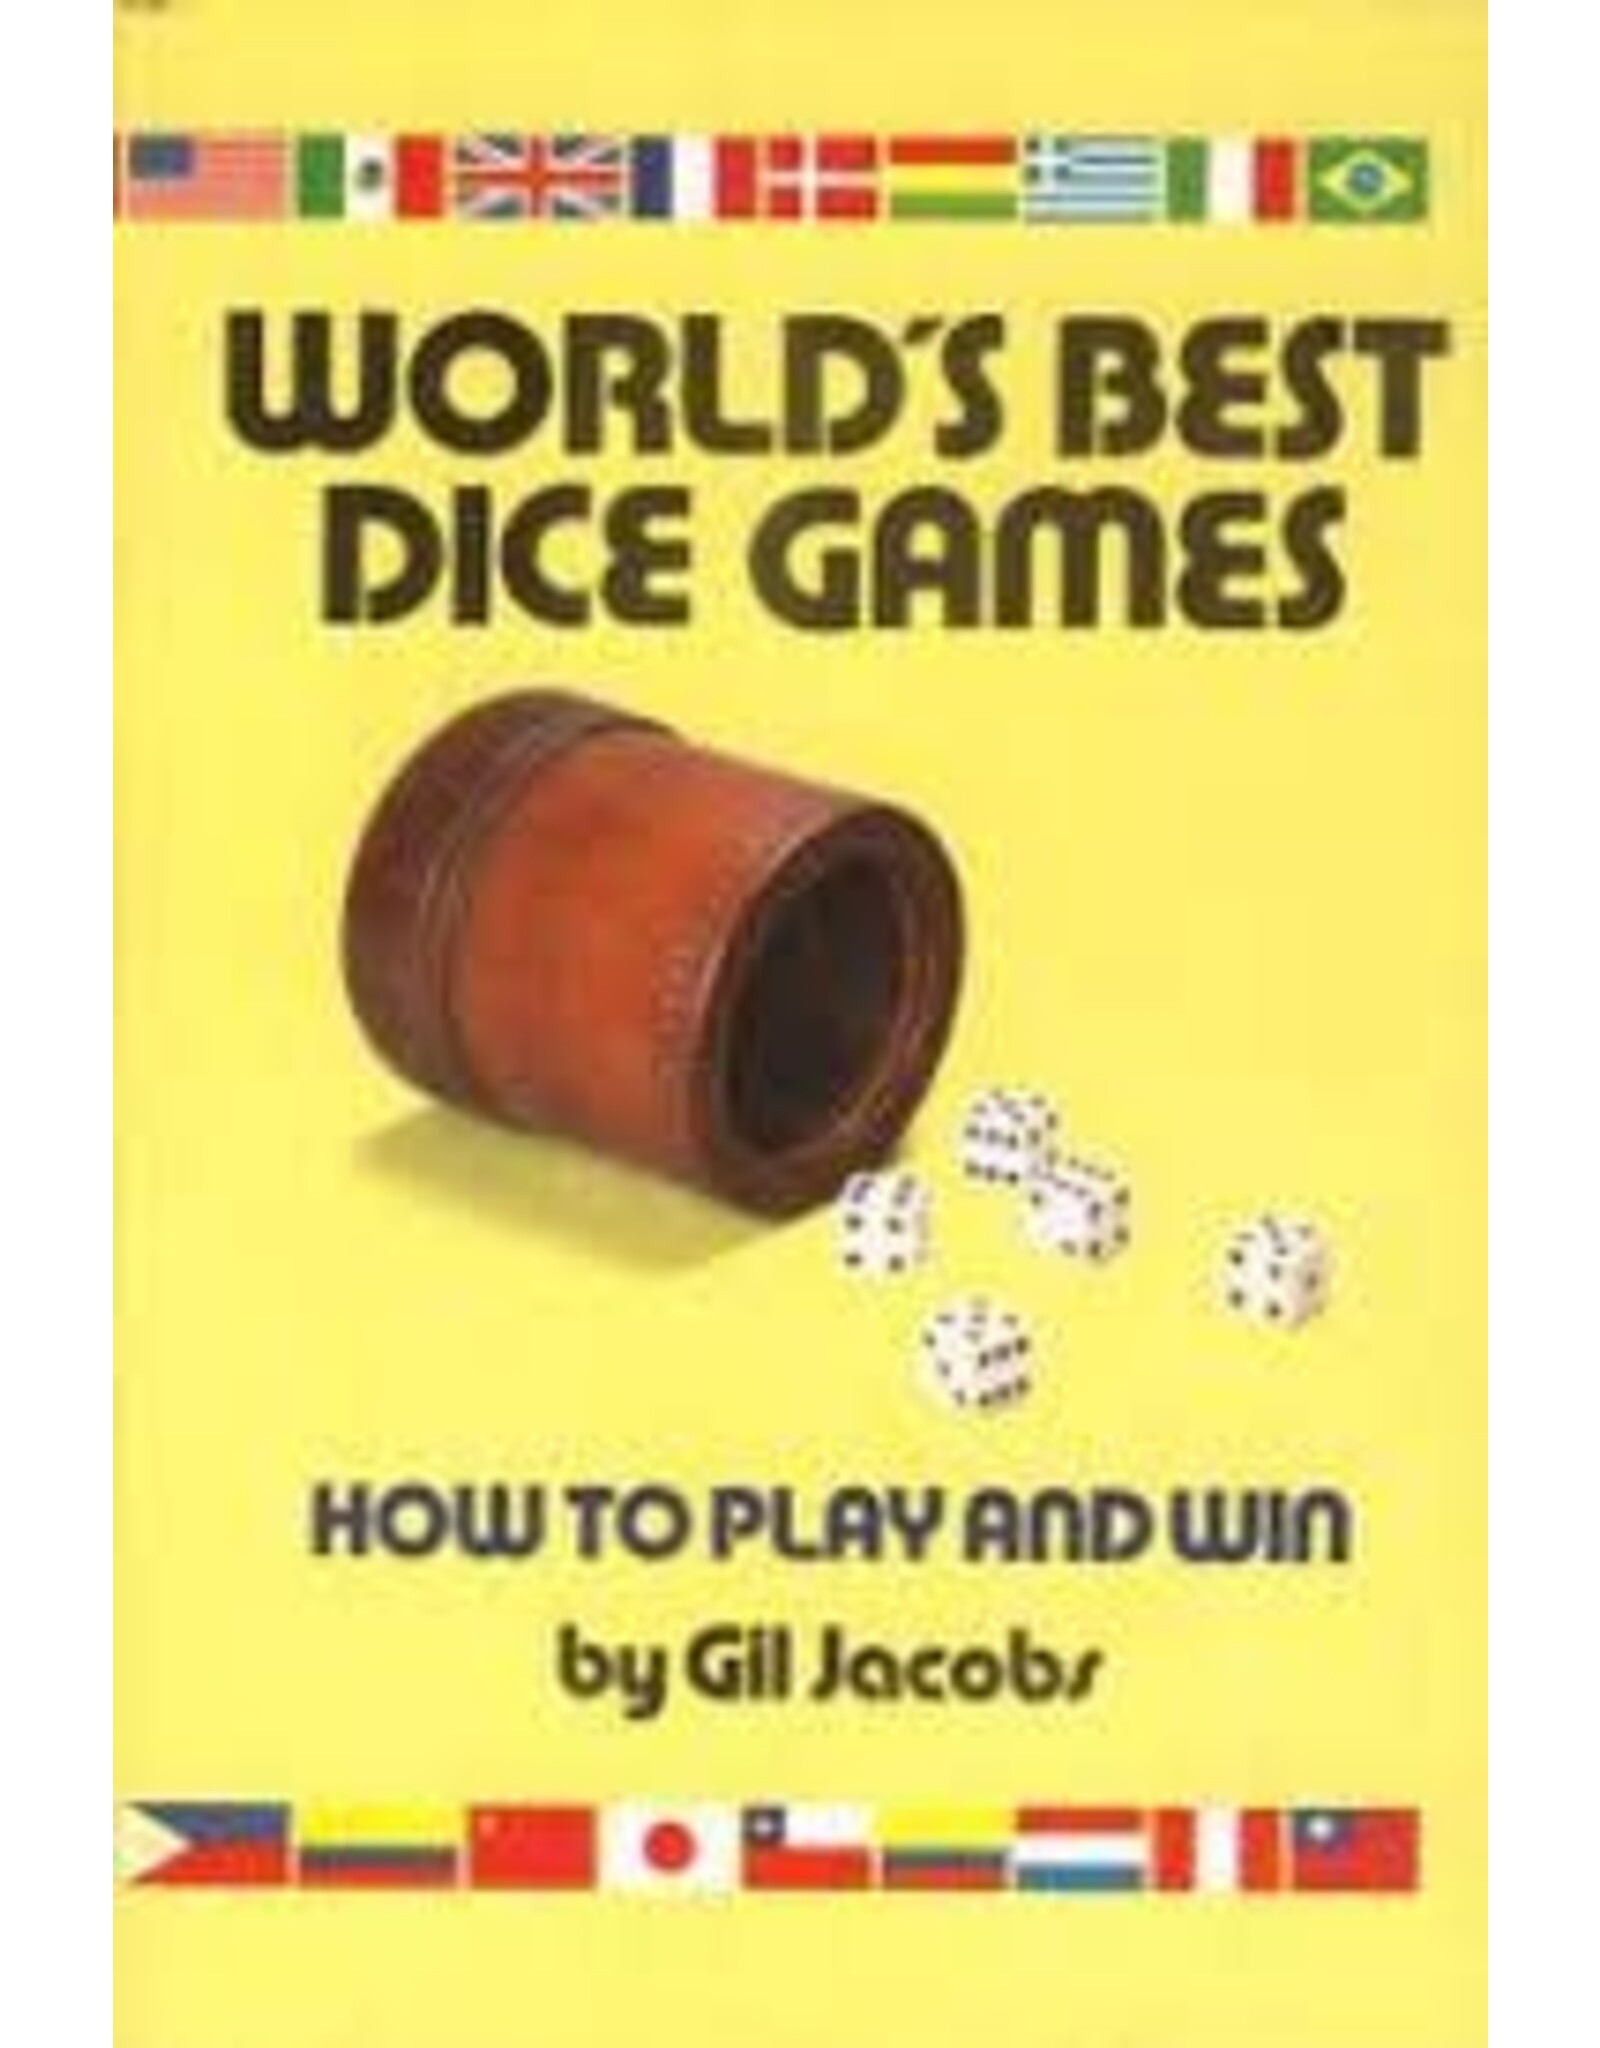 World's Best Dice Games